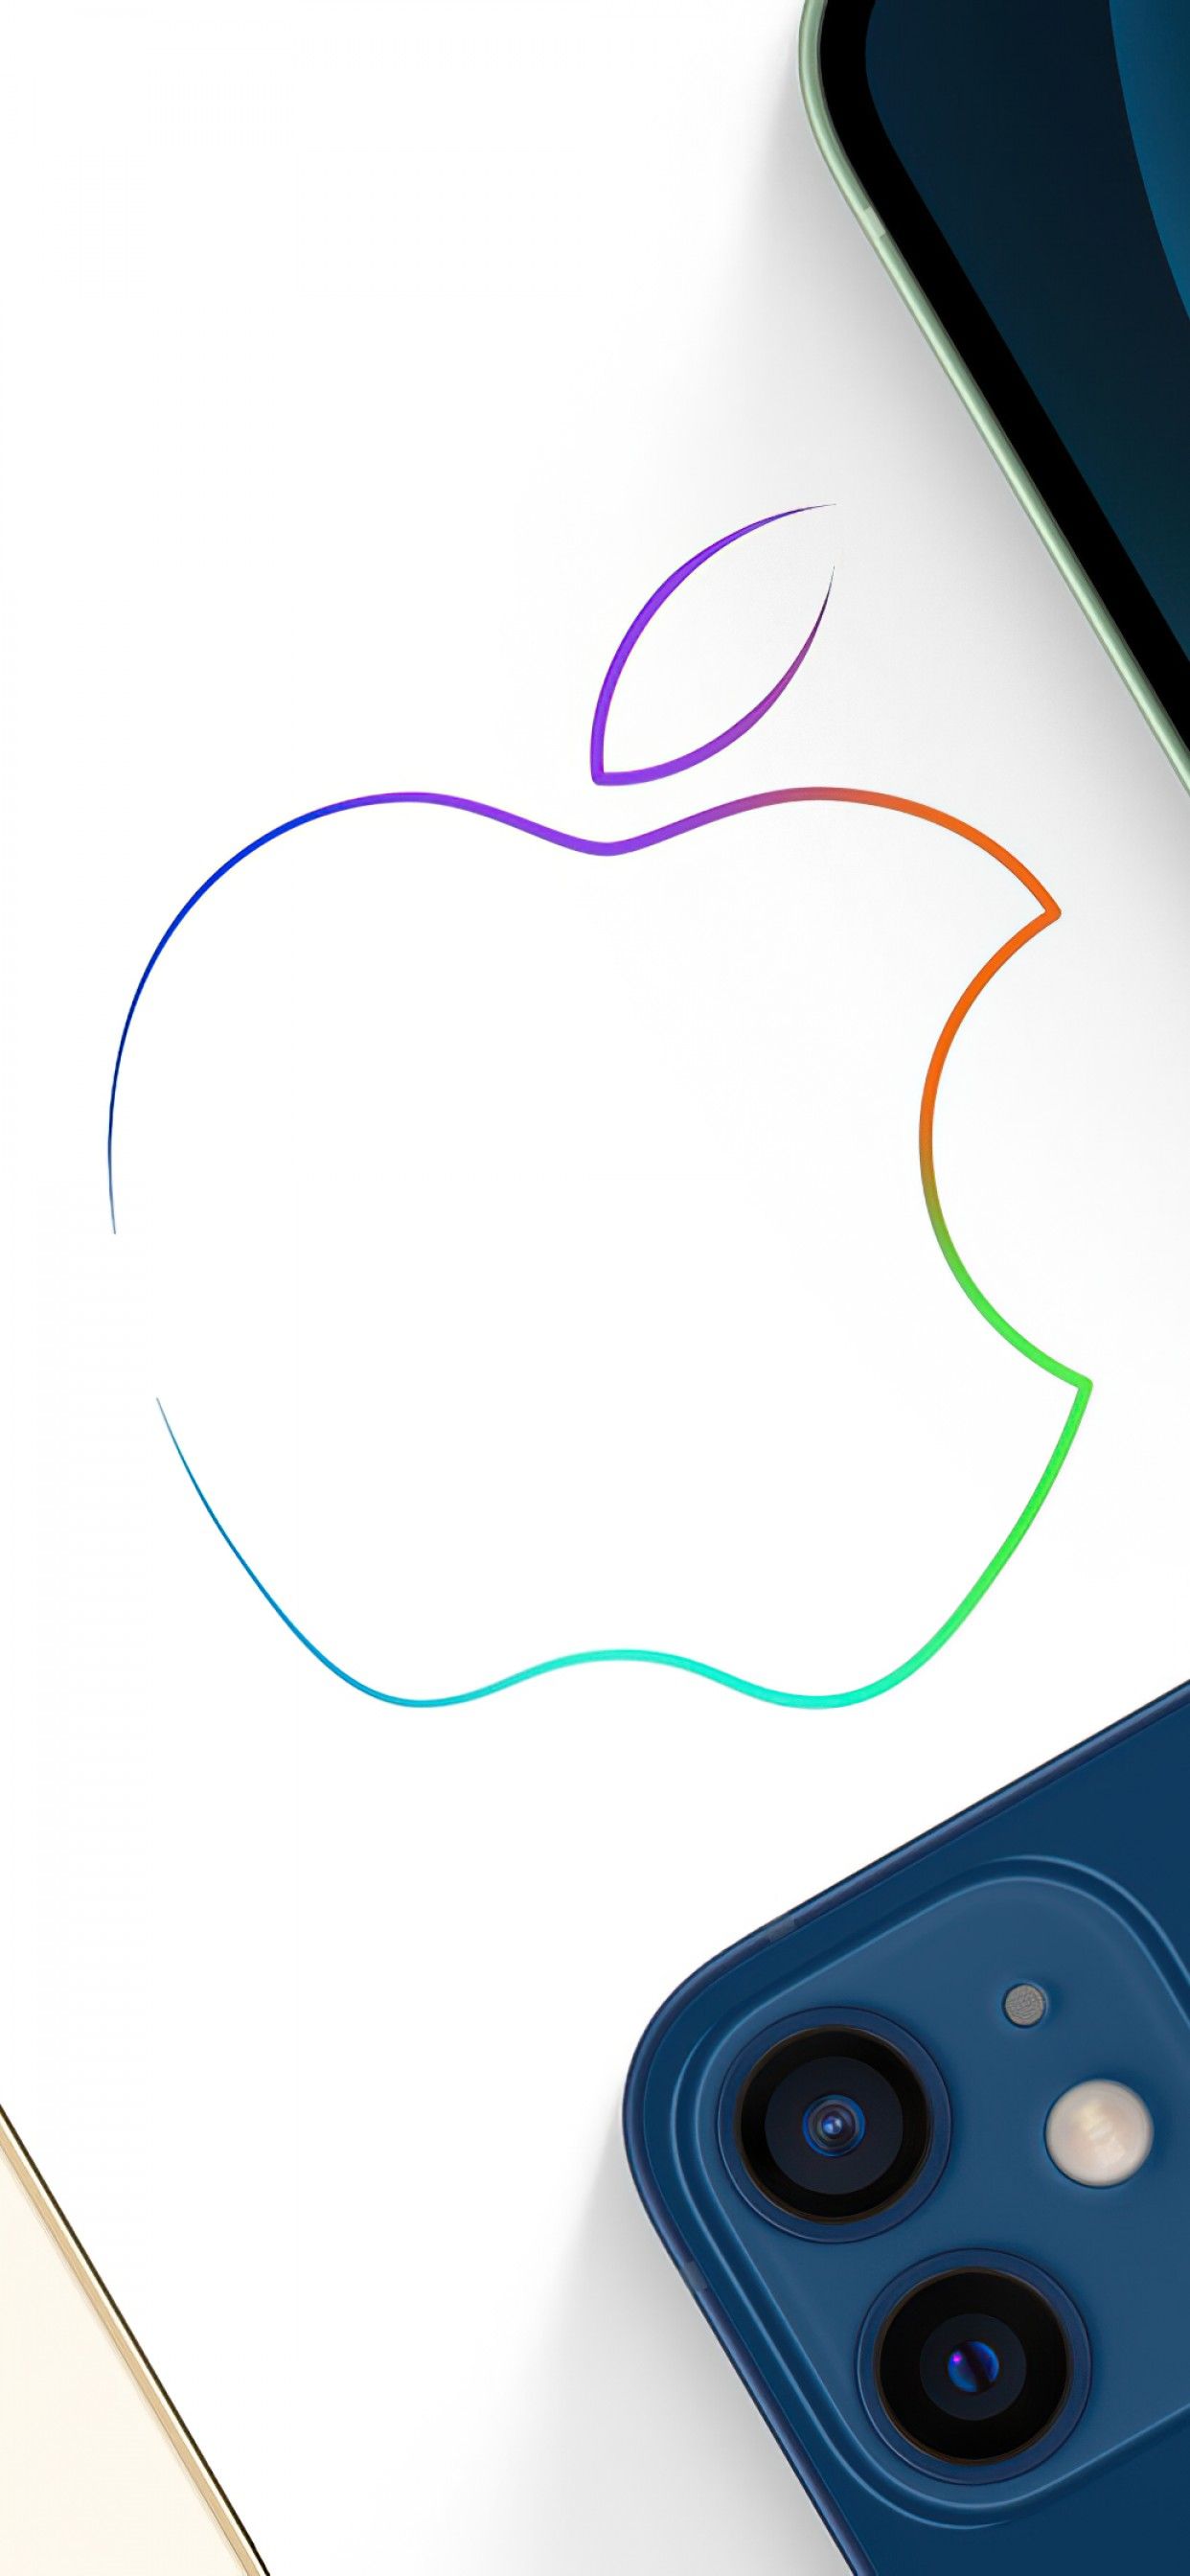 Apple logo 4K Wallpaper, iPhone iPhone 12 Pro, iPhone 12 Pro Max, iPhone 12 Mini, Apple Event, Technology